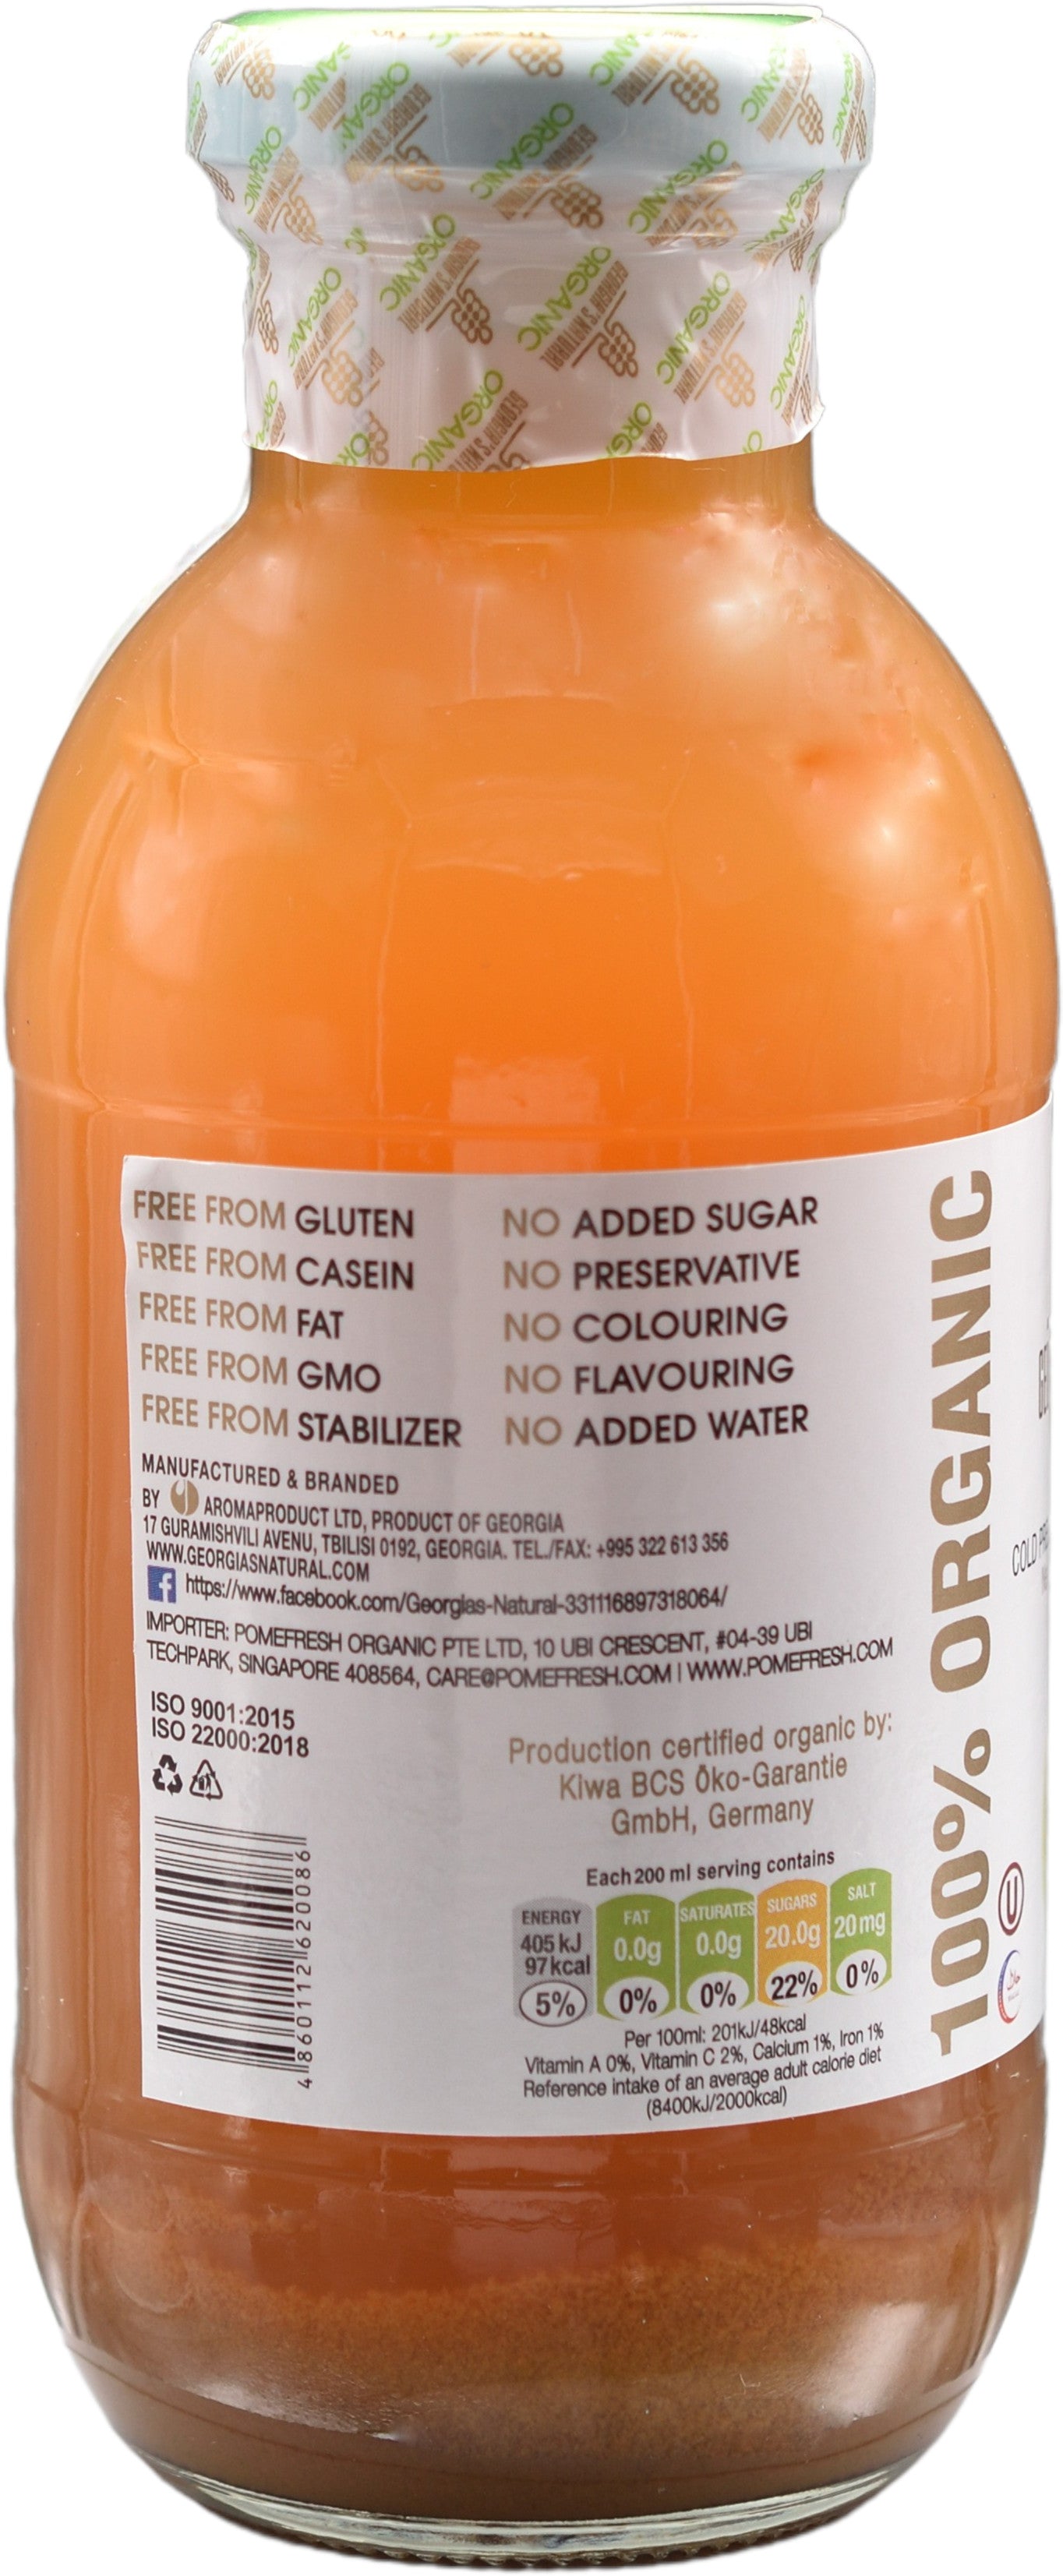 【Georgia's Natural】Apple Juice 300mLX6 Bottles | 100% Pure Organic | Immunity Booster